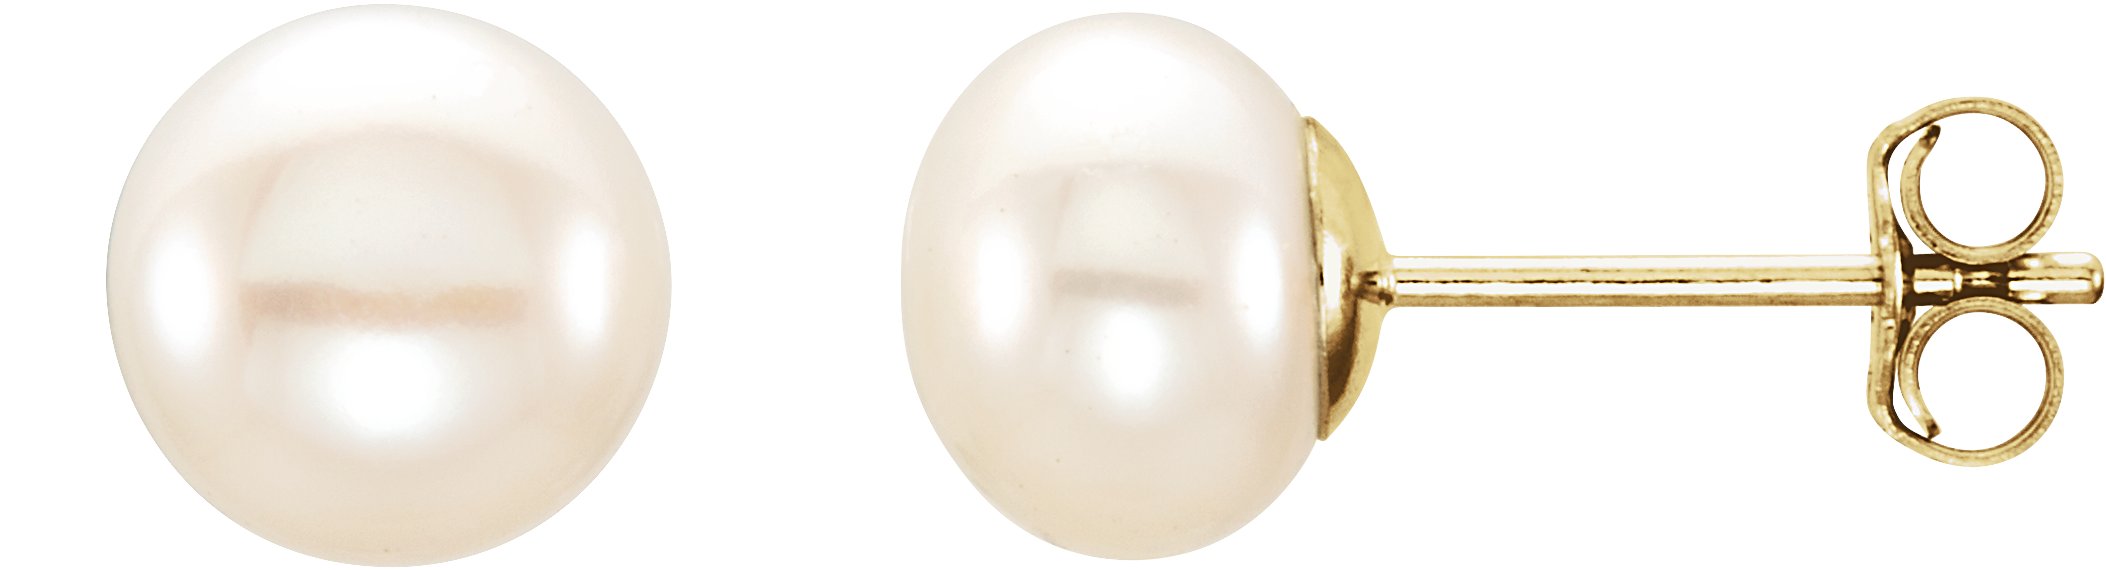 14K Yellow 6 7 mm White Freshwater Cultured Pearl Earrings Ref. 9996052